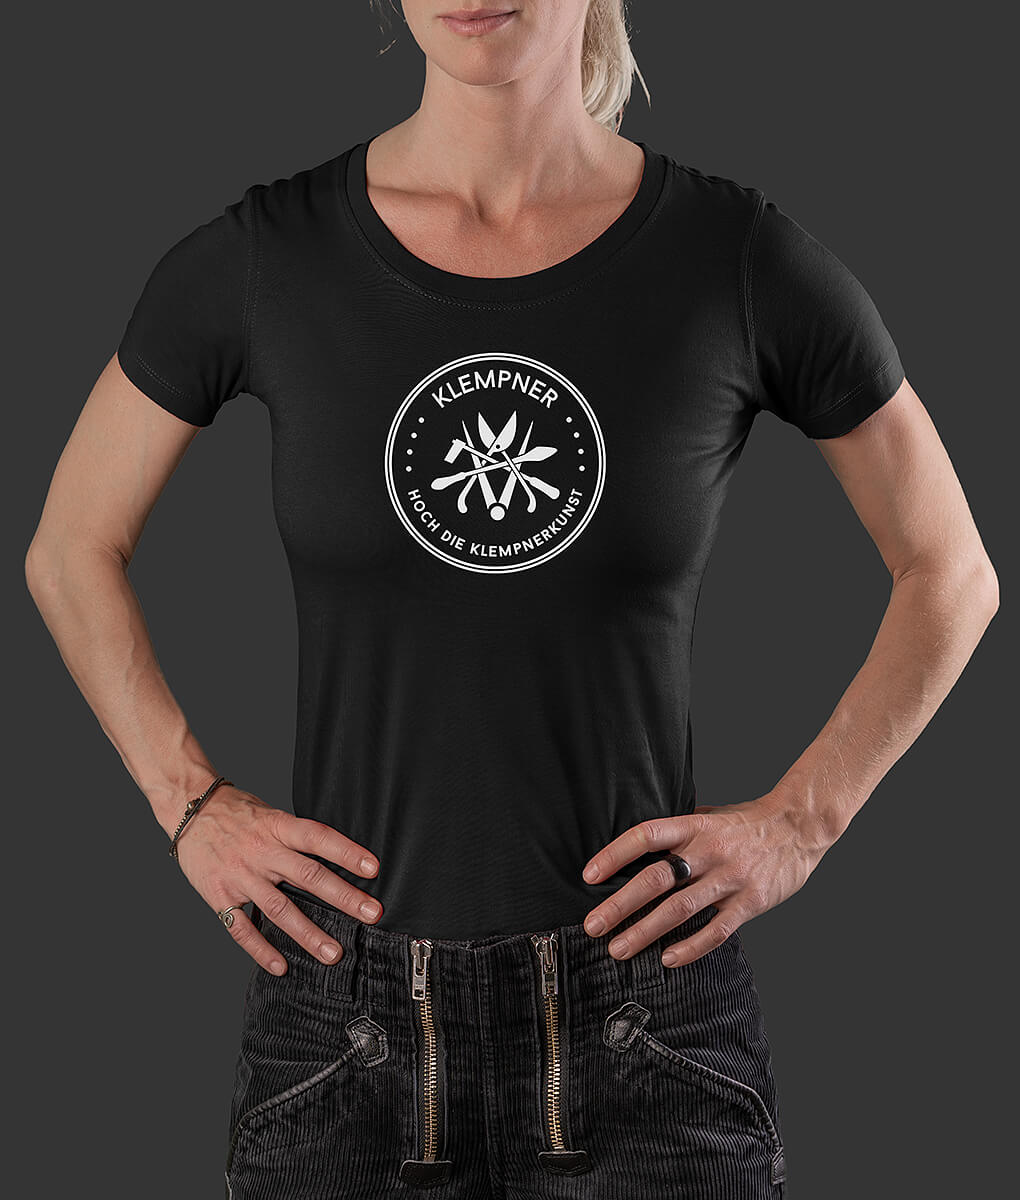 T-Shirt Louisa Siegel Klempner Brust schwarz L